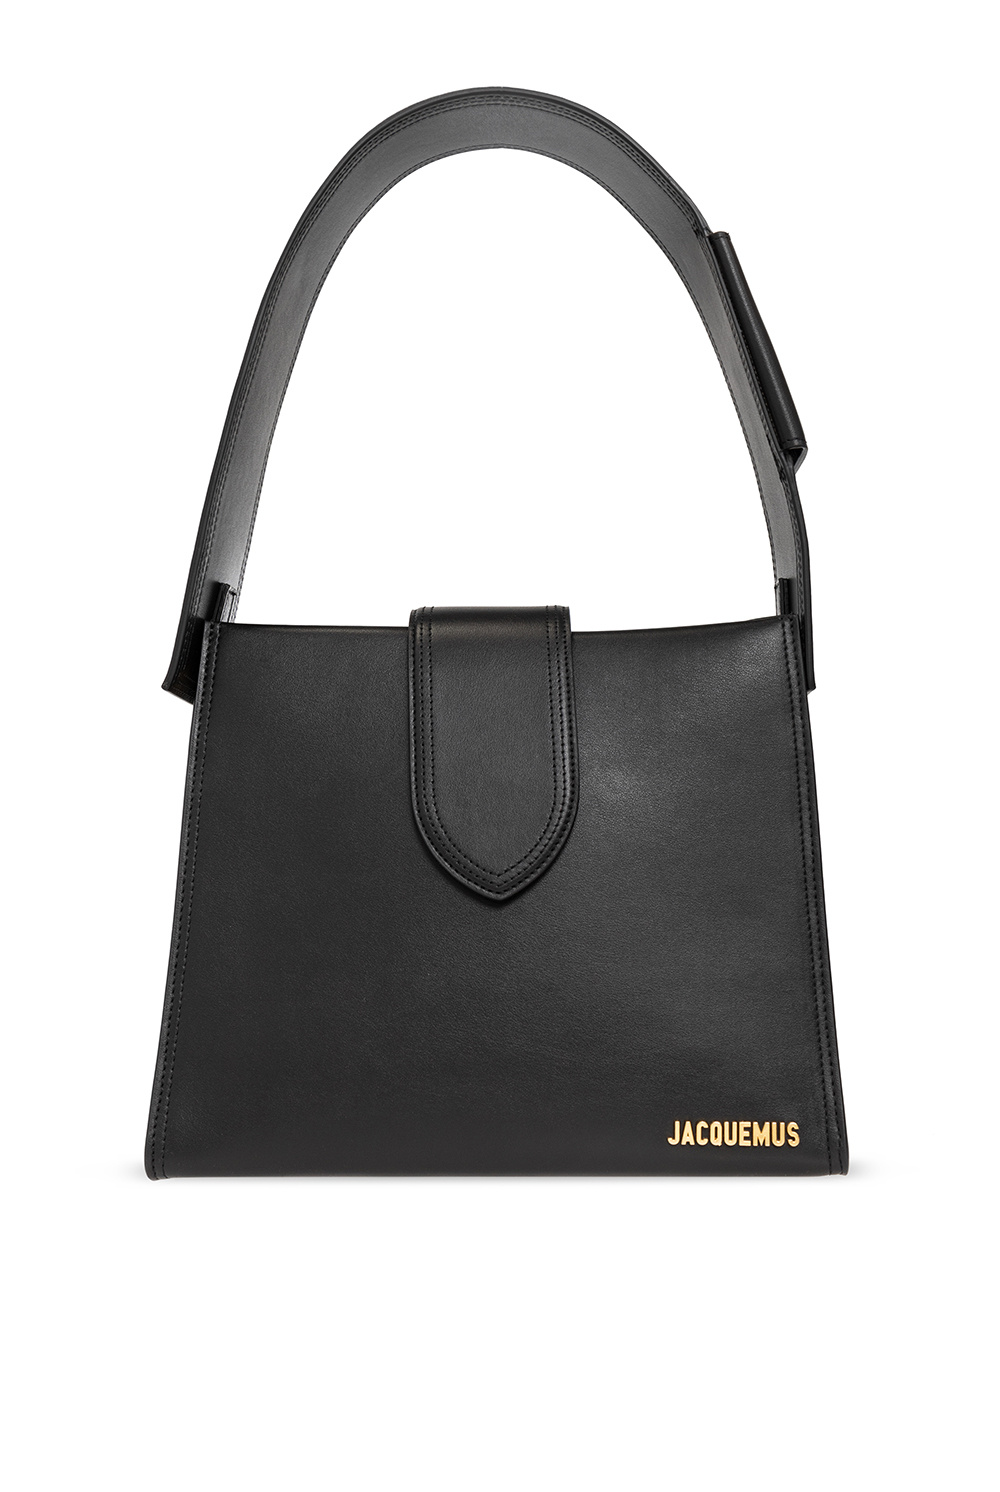 Jacquemus ‘Le Bambino 24’ shoulder Travel bag